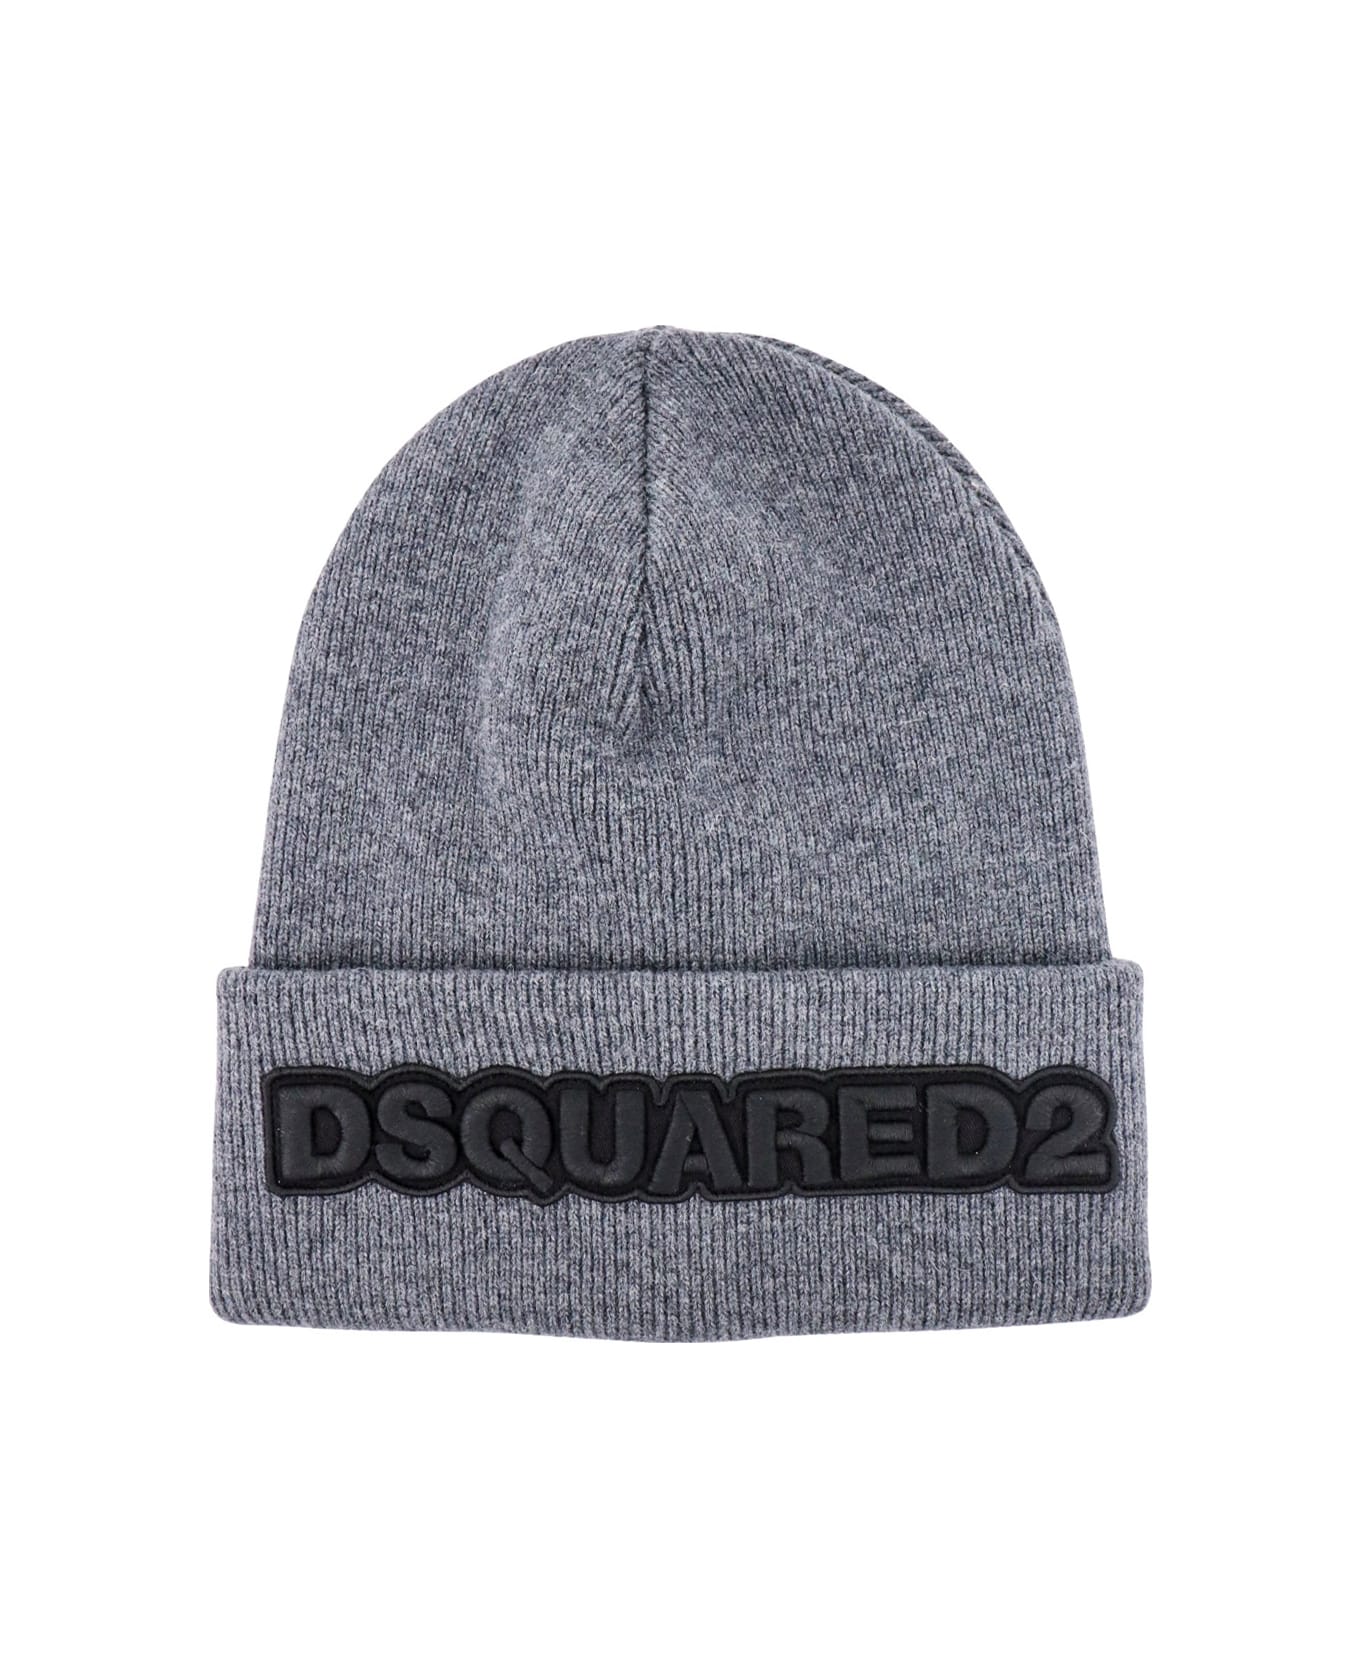 Dsquared2 Hat - Grey